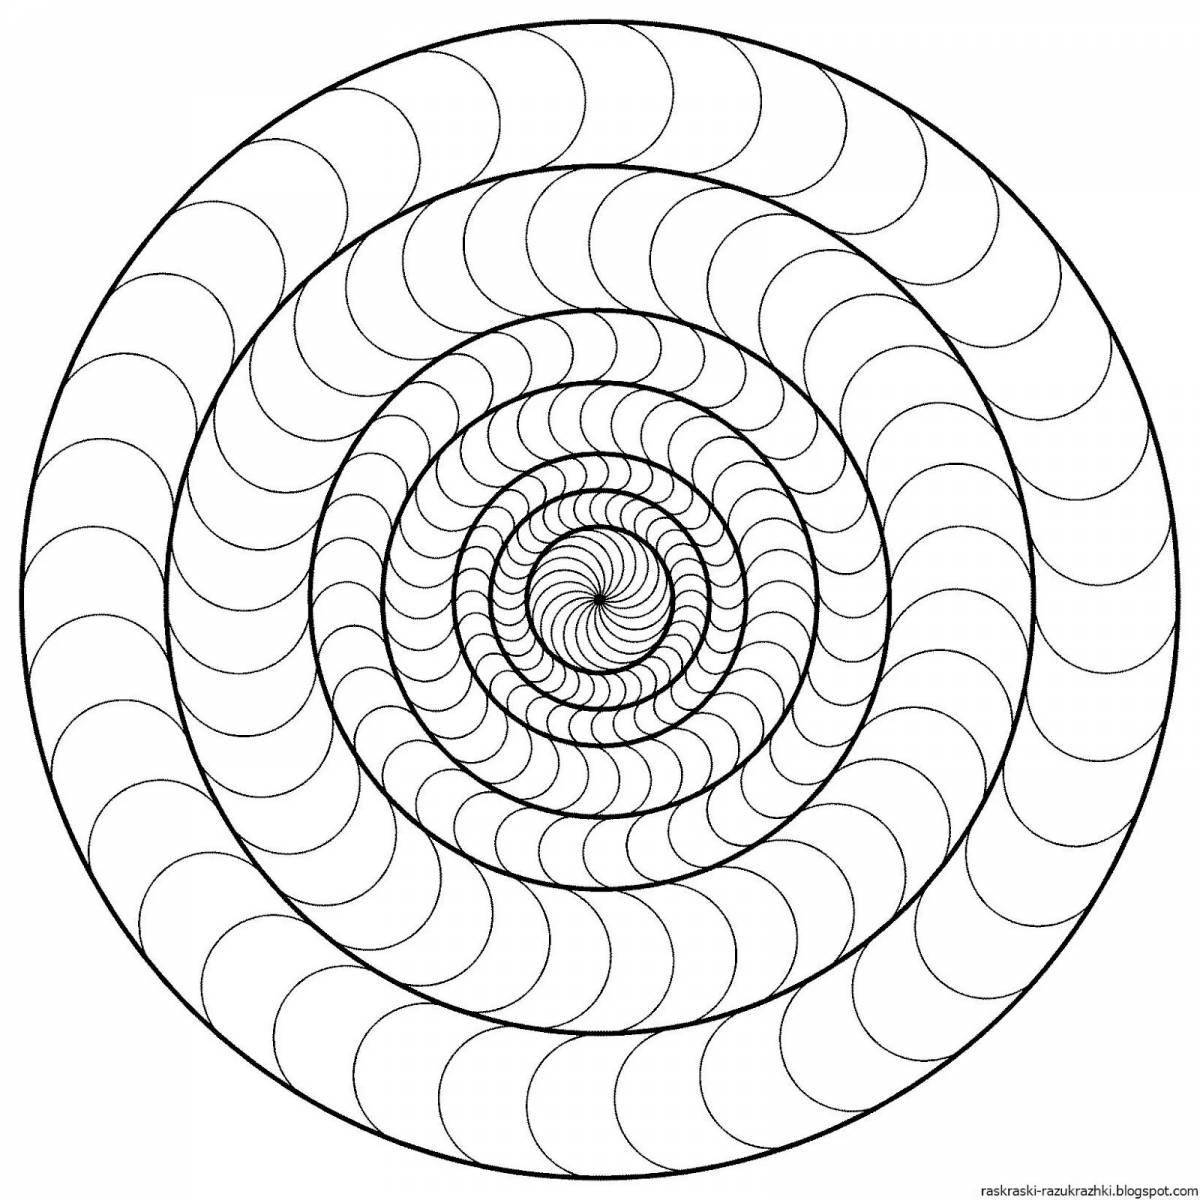 Fun coloring page with circular pattern